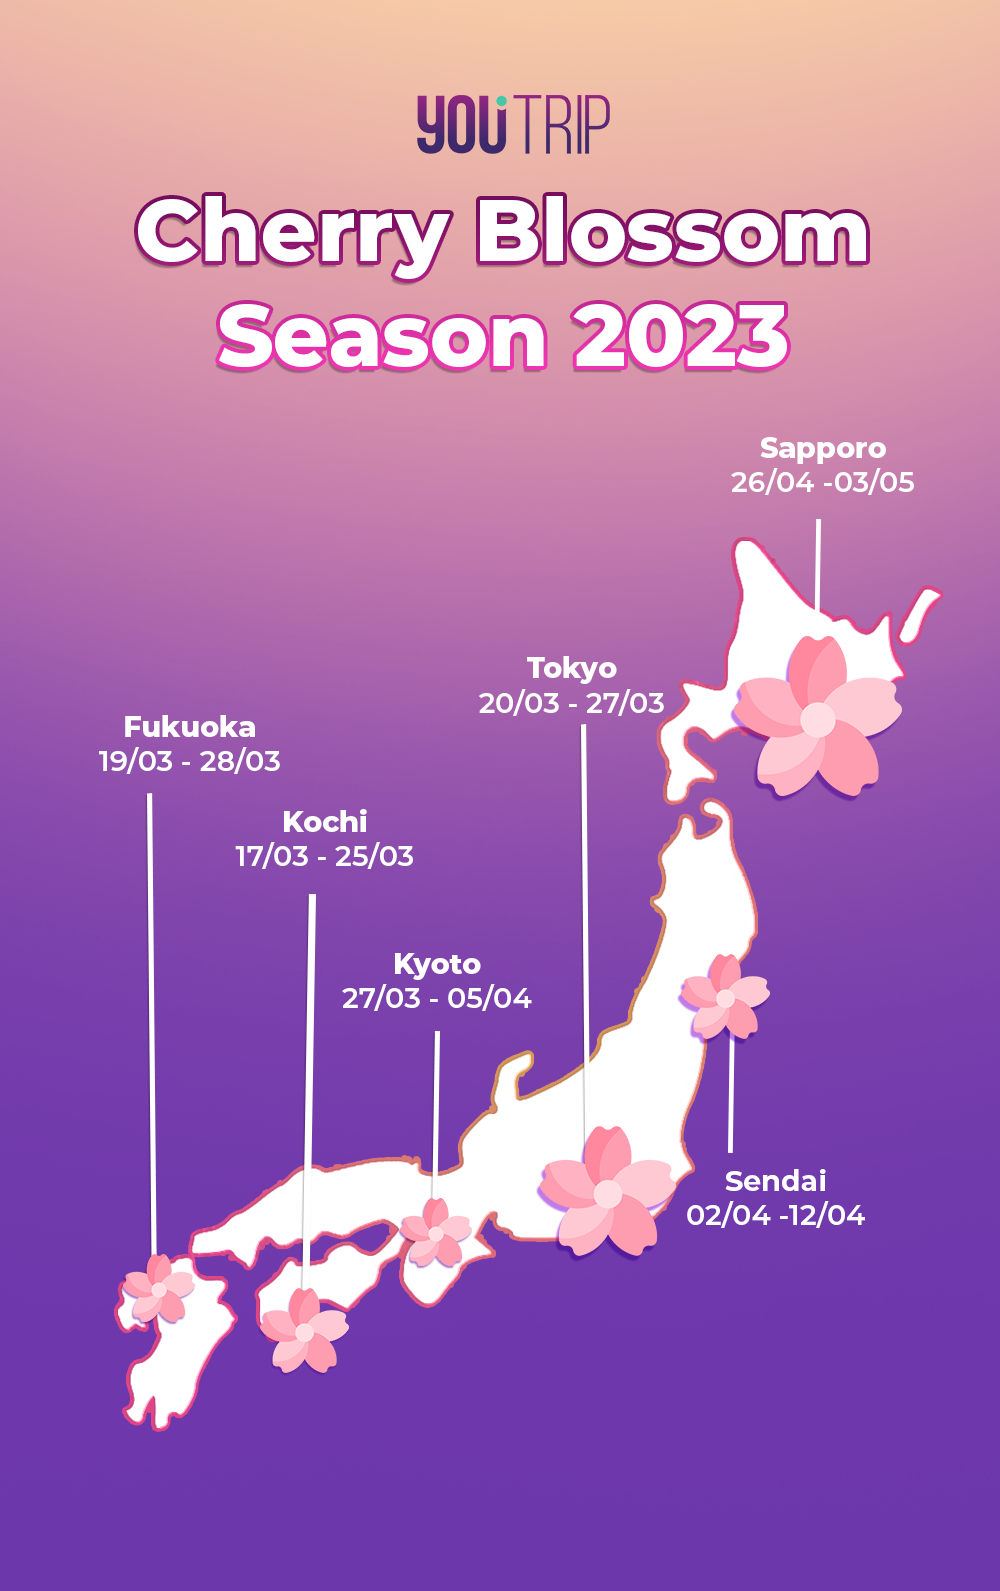 youtrip-s-sakura-forecast-japan-2023-cherry-blossom-season-blog